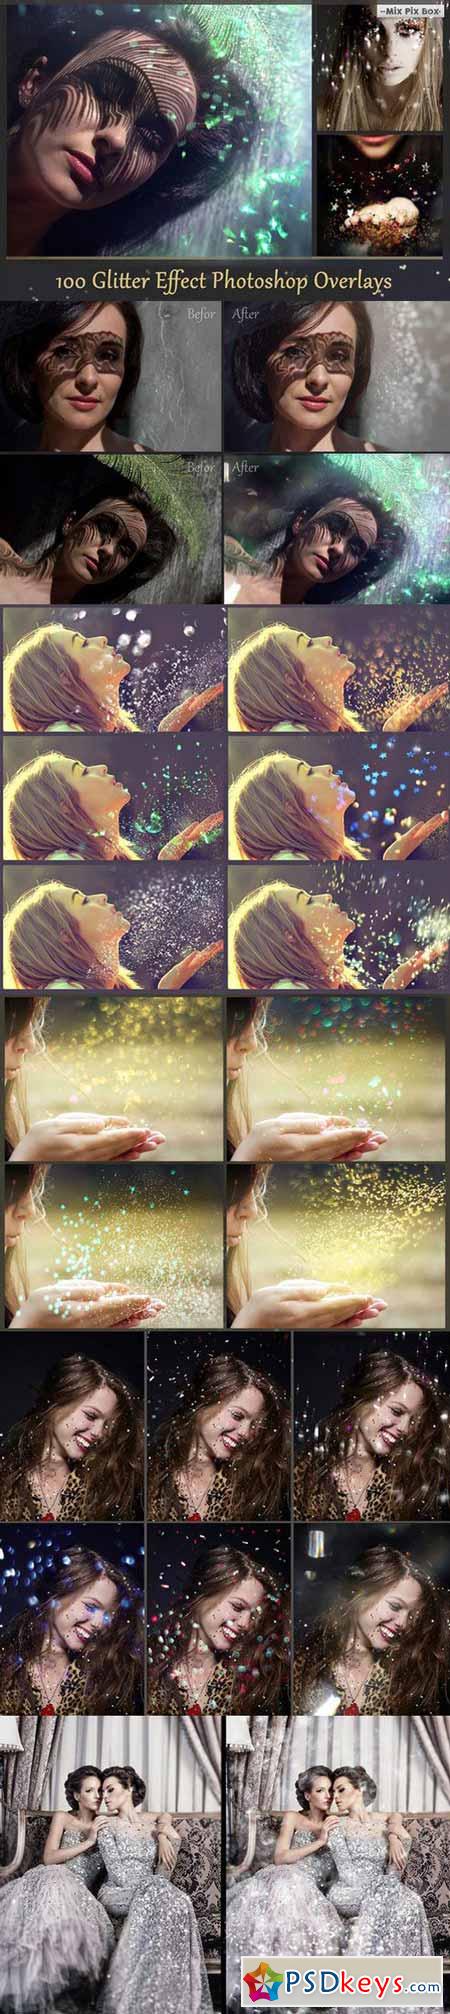 Glitter Effect Photo Overlays 632347